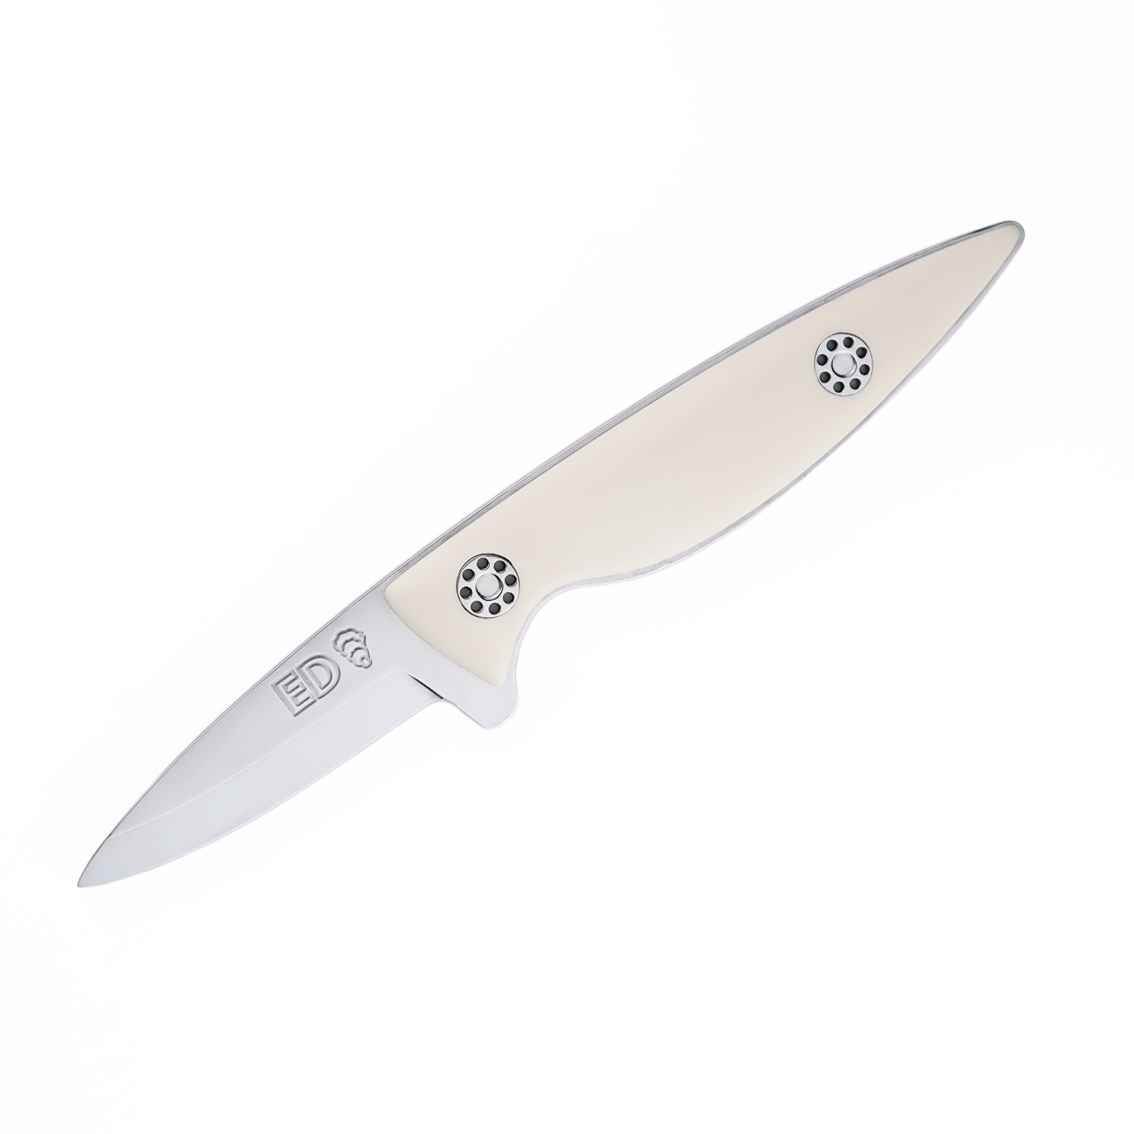 The Enduris Oyster Knife - White Ivory